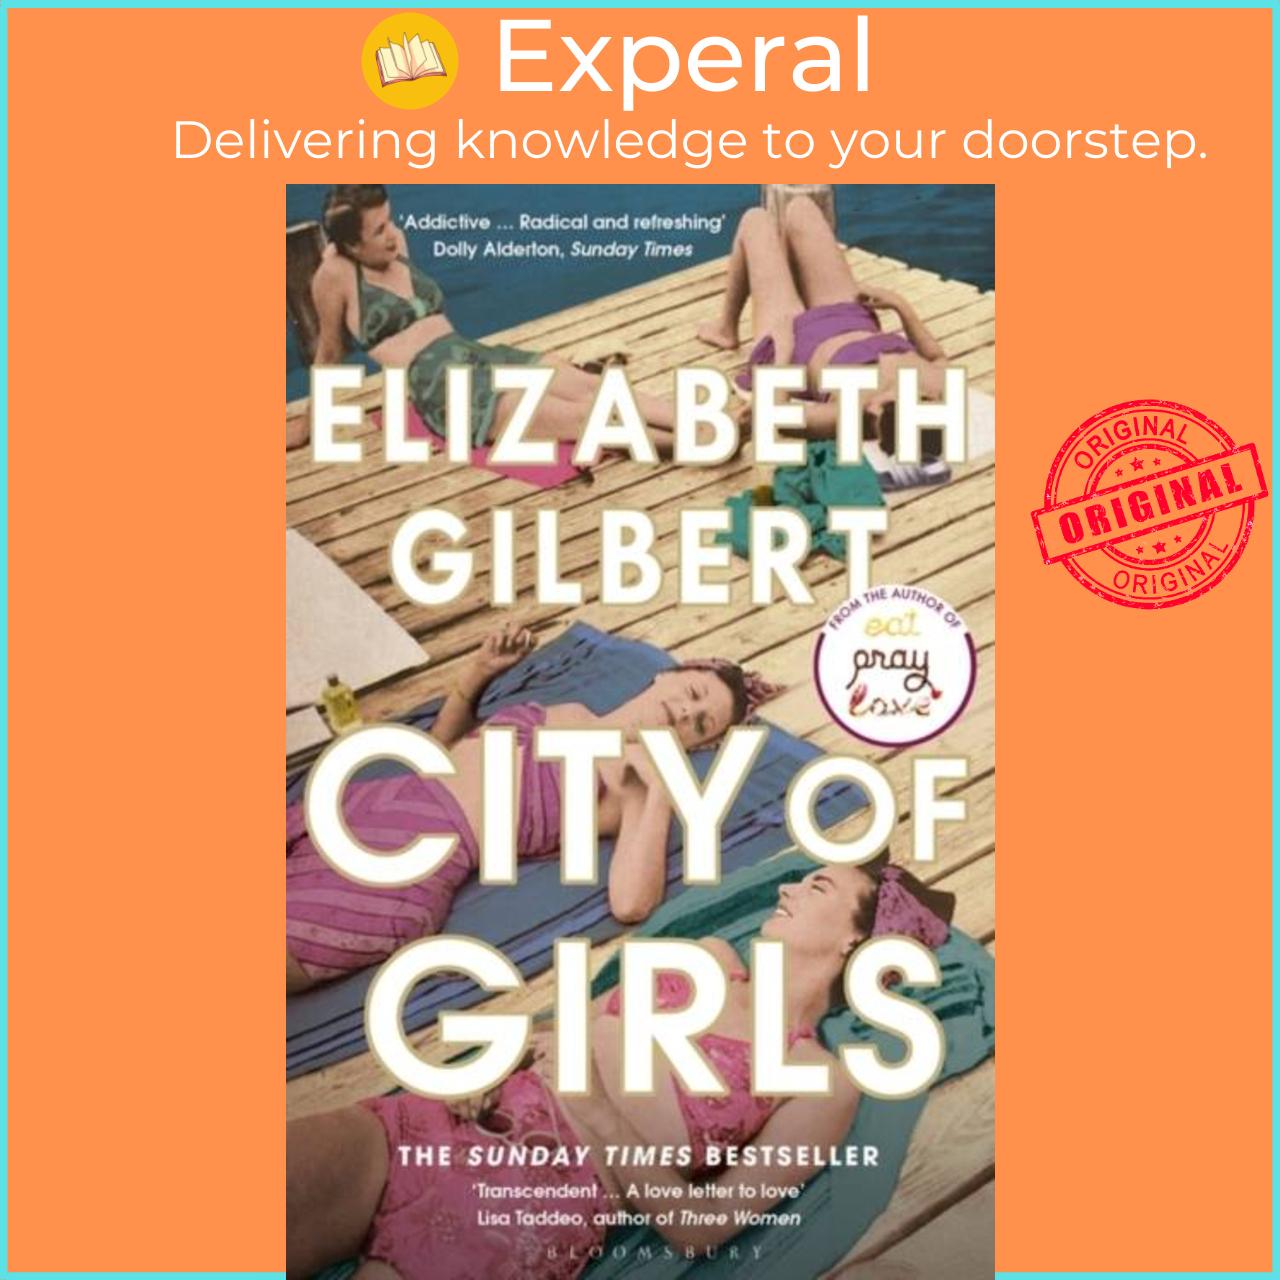 Sách - City of Girls - The Sunday Times Bestseller by Elizabeth Gilbert (UK edition, paperback)